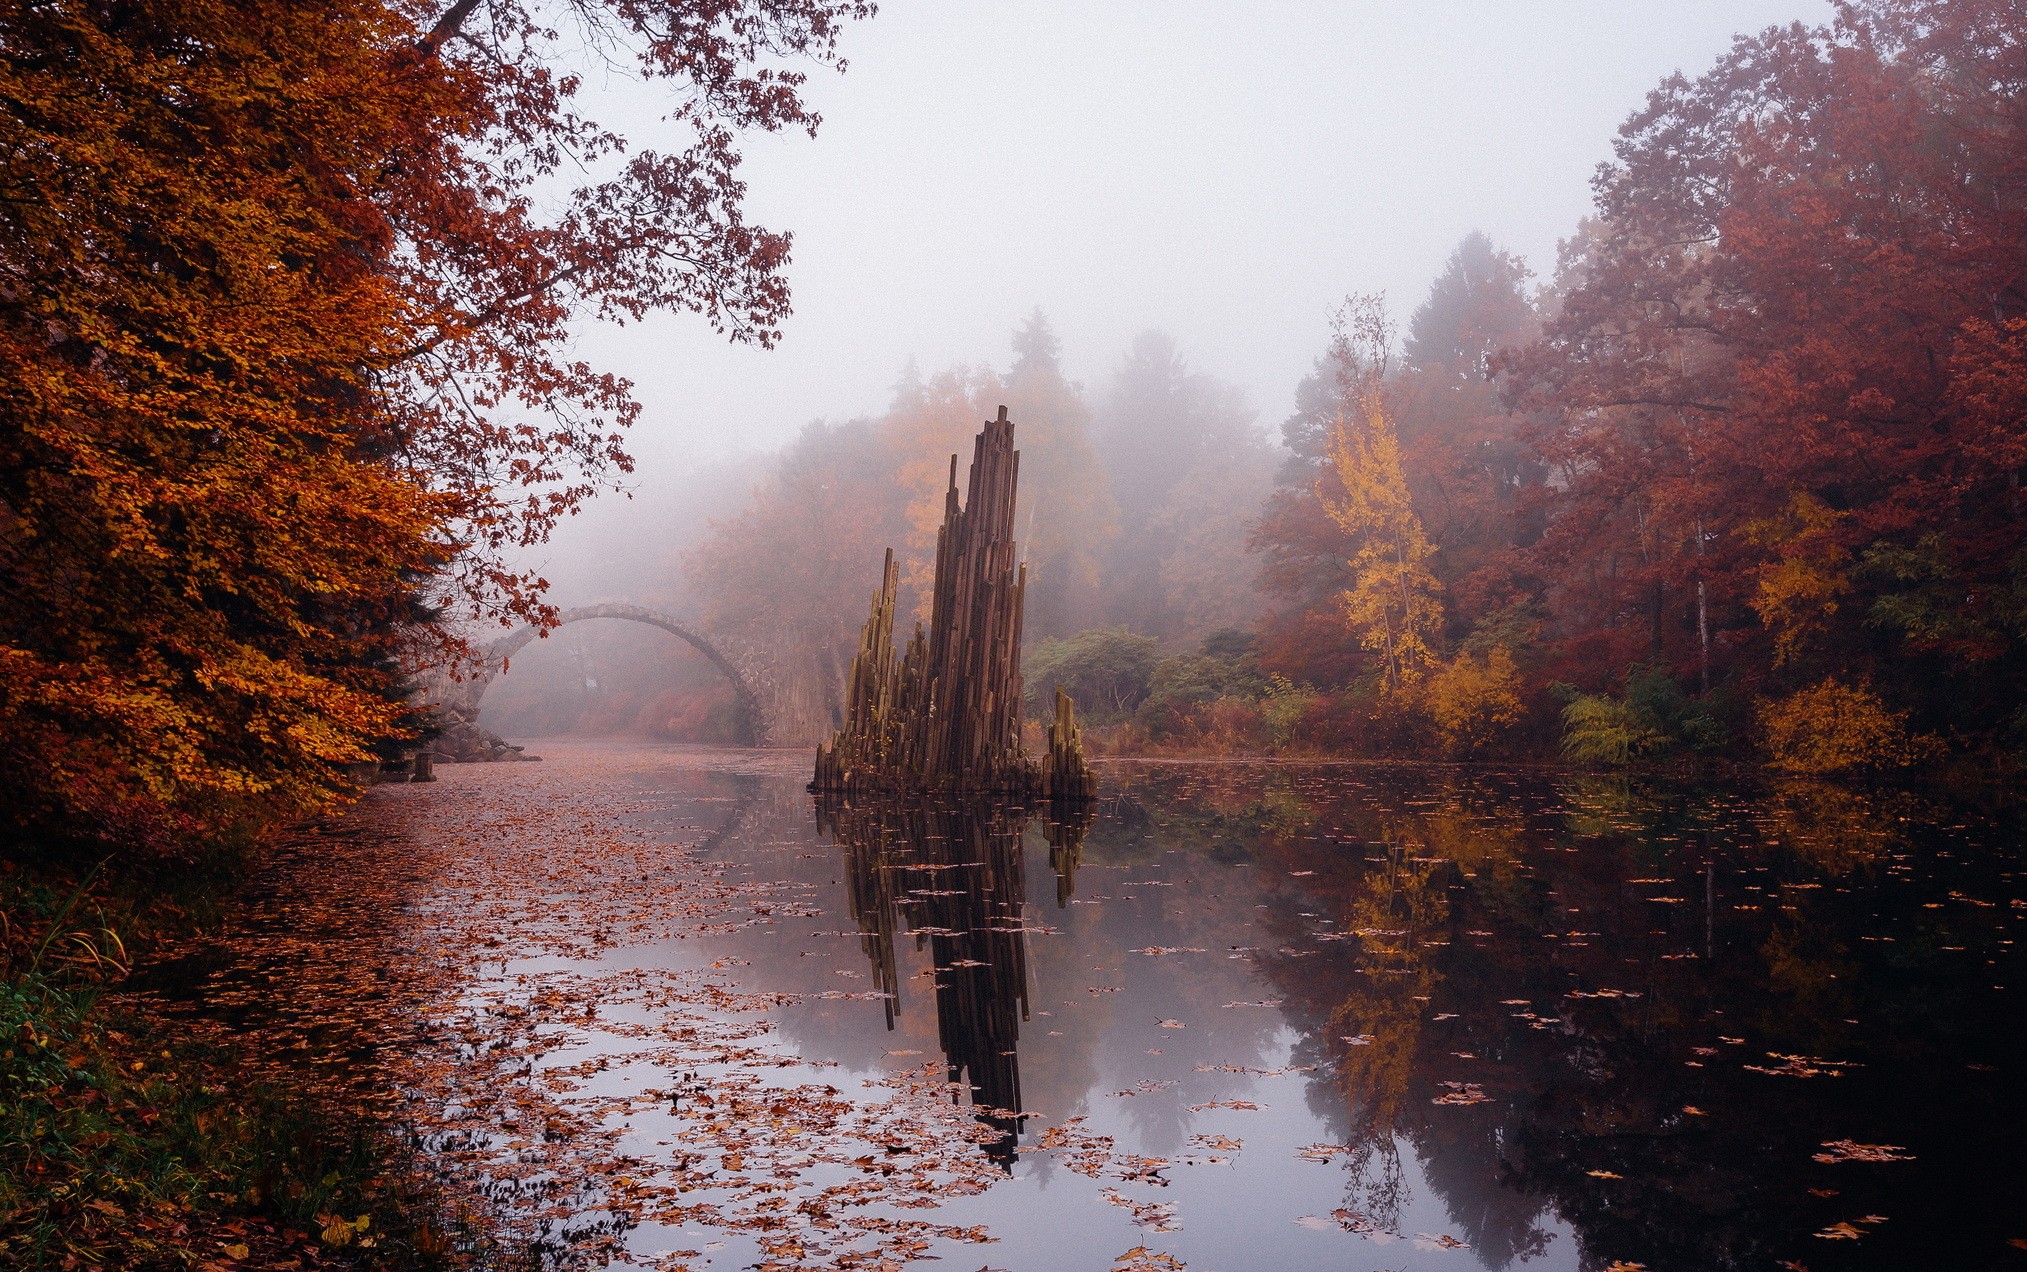 General 2027x1272 landscape river bridge mist fall fallen leaves red leaves nature reflection